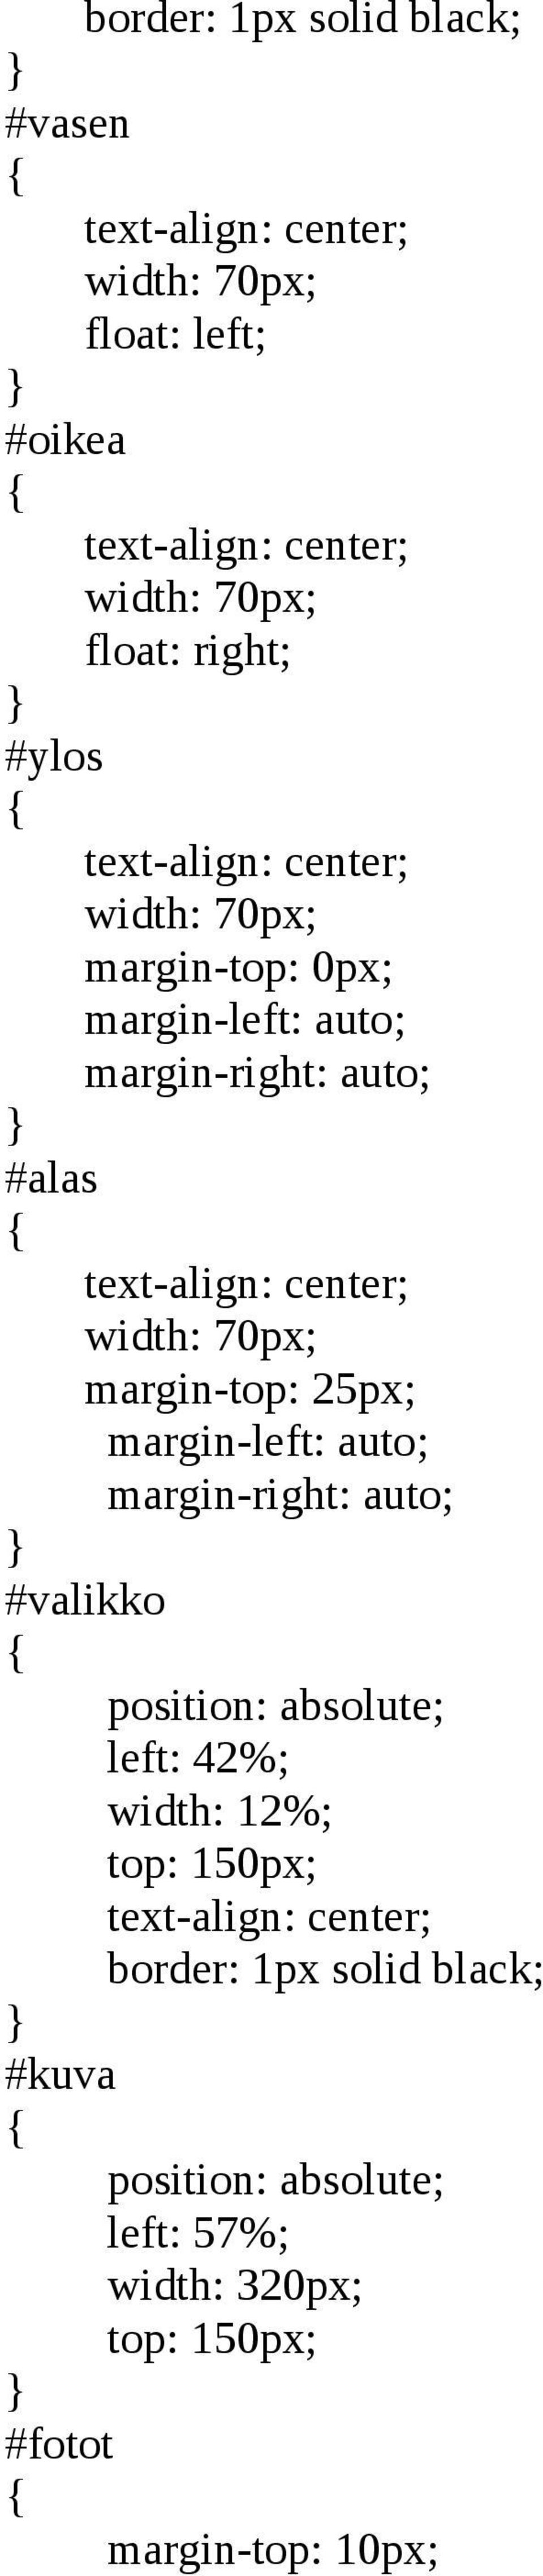 width: 70px; margin-top: 25px; margin-left: auto; margin-right: auto; #valikko position: absolute; left: 42%; width: 12%; top: